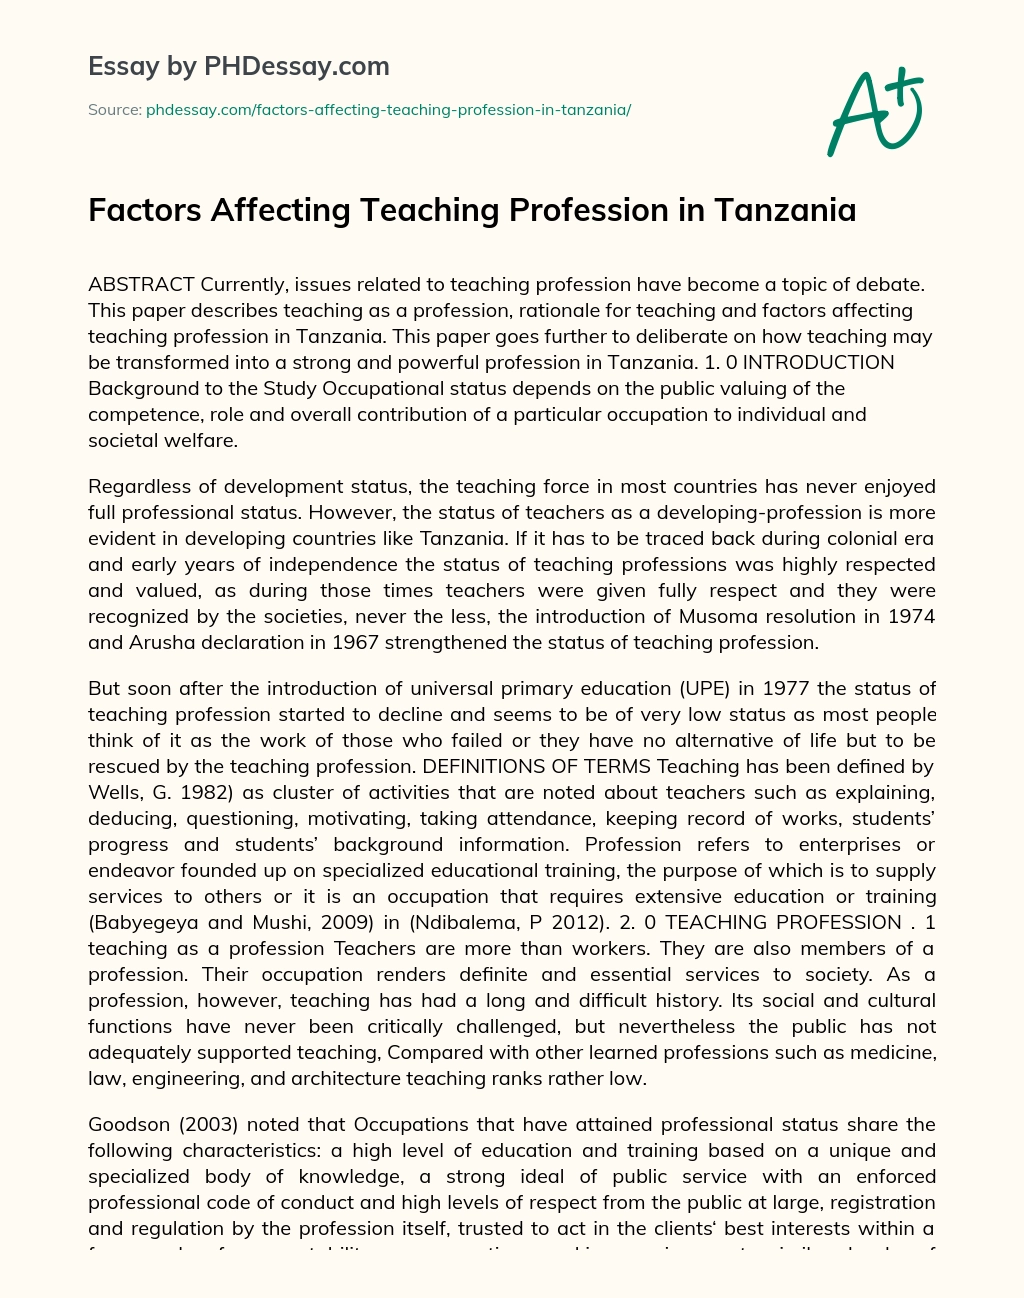 Factors Affecting Teaching Profession in Tanzania essay